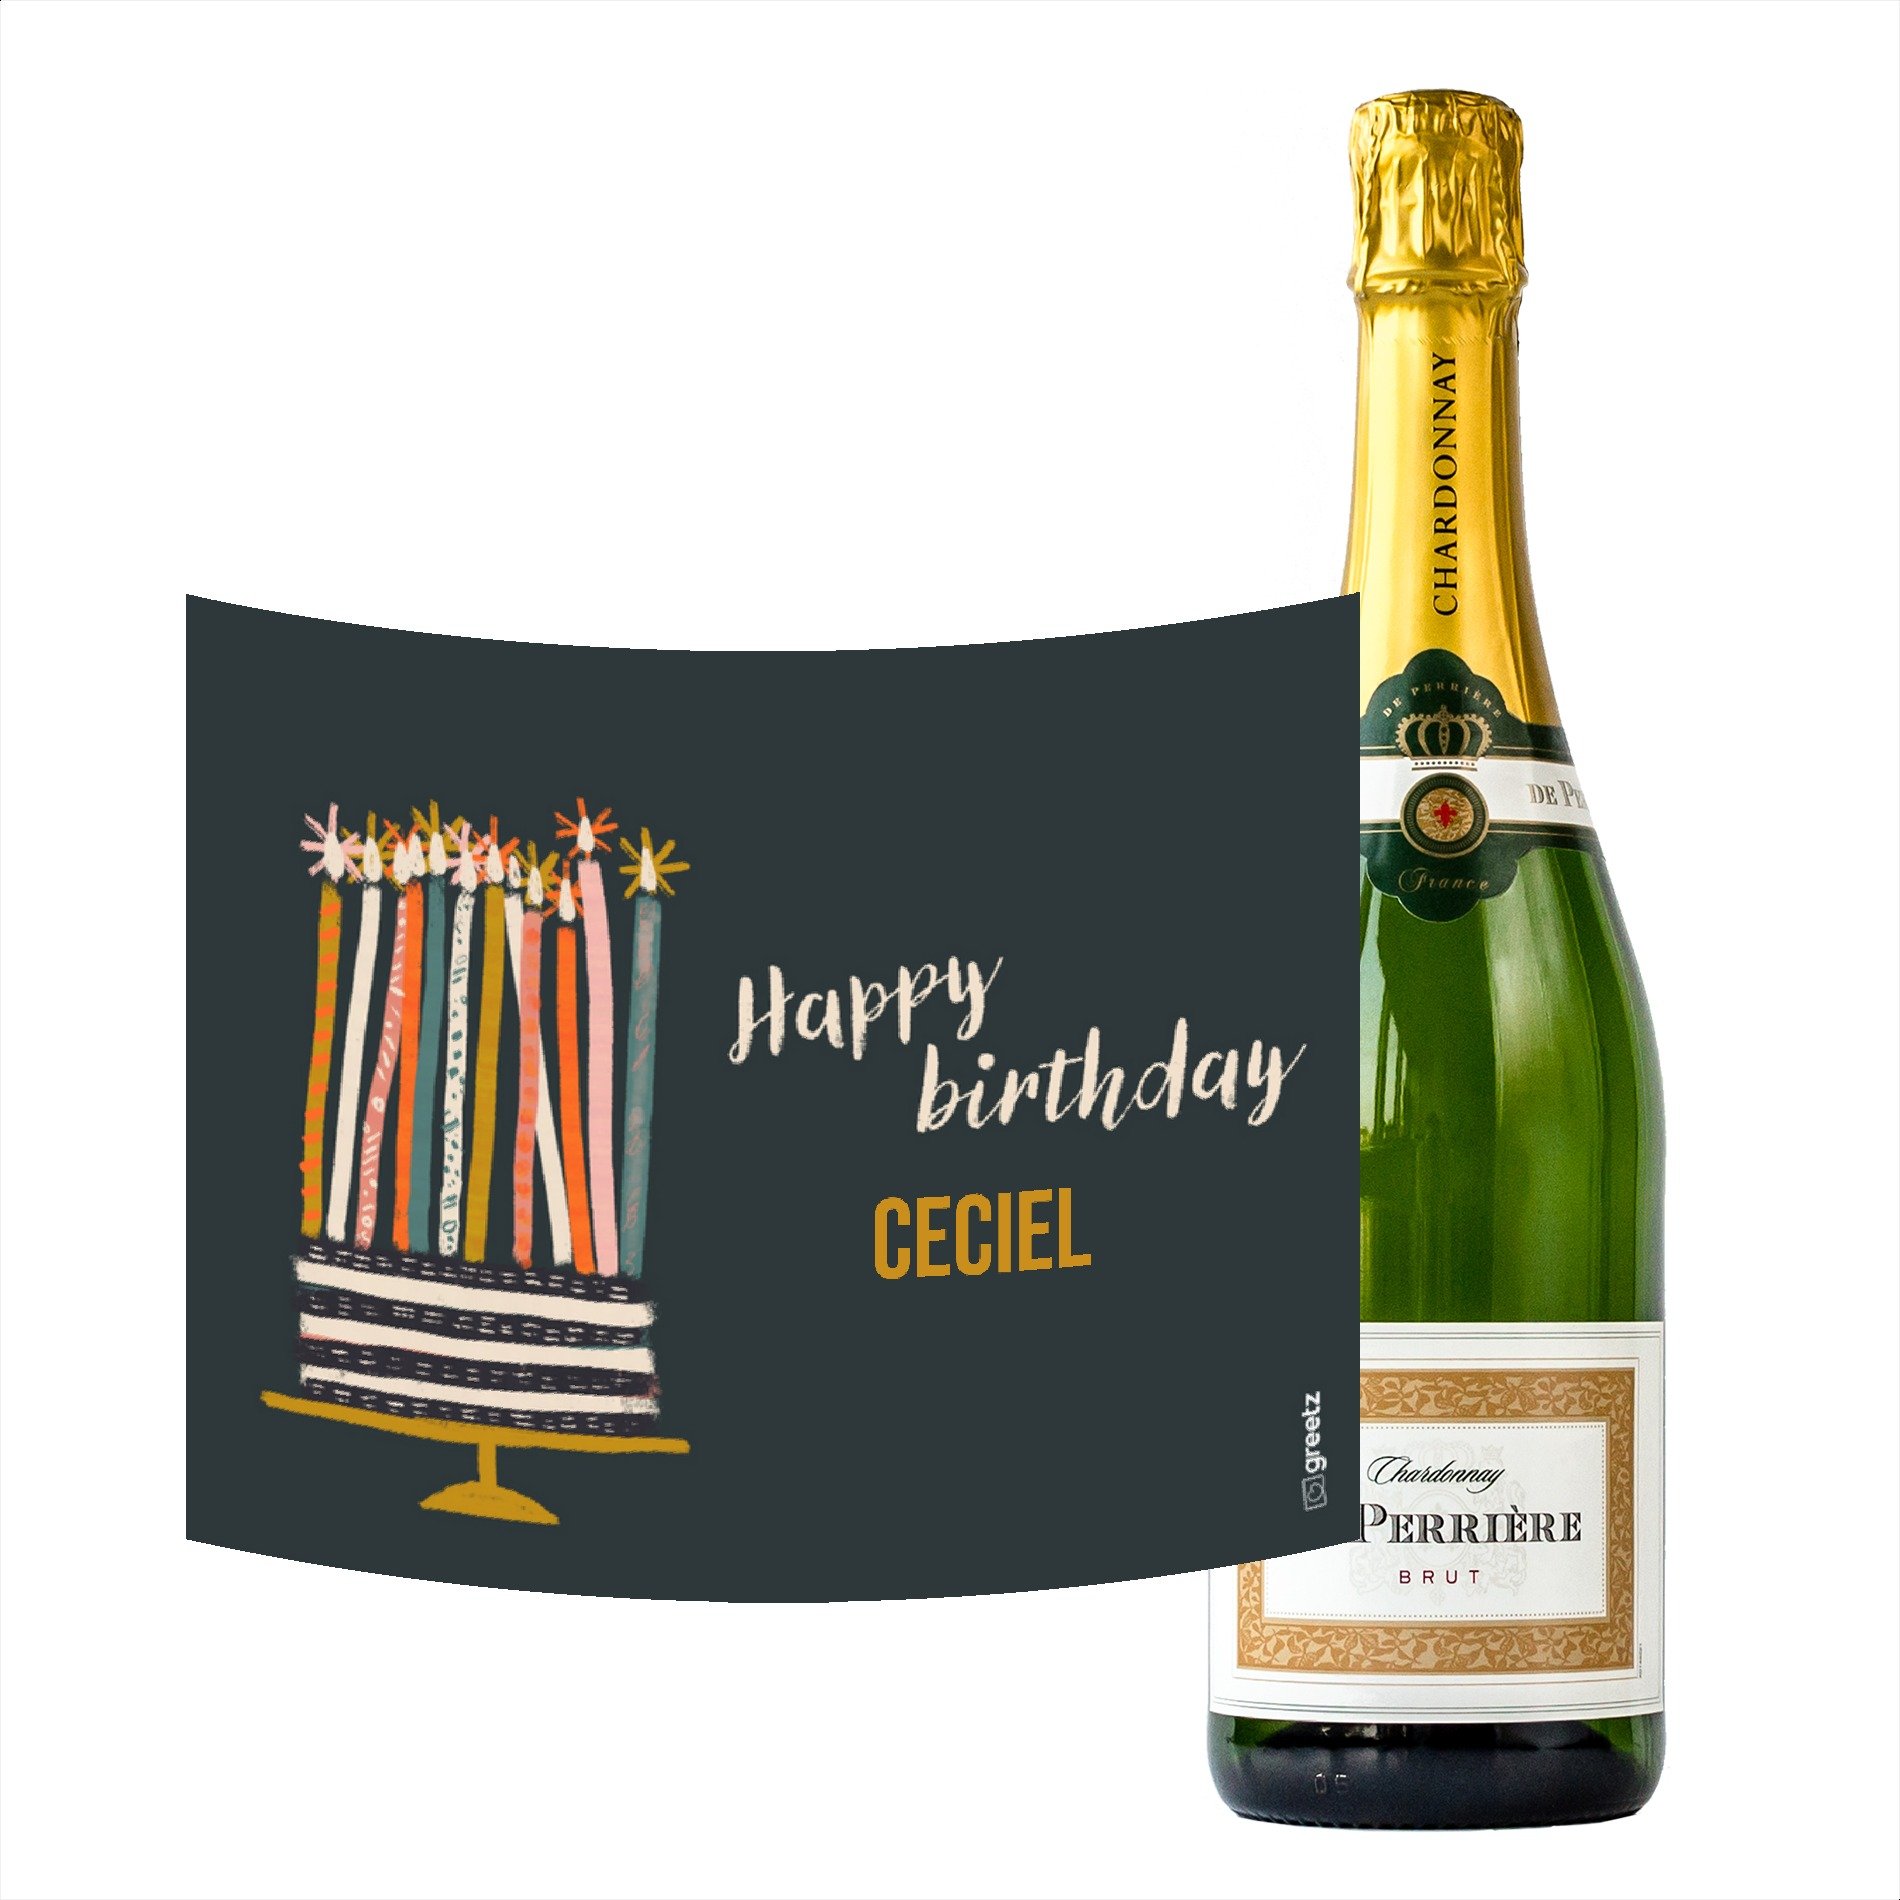 Perriere - Brut Chardonnay - Happy Birthday met eigen naam - 750ml